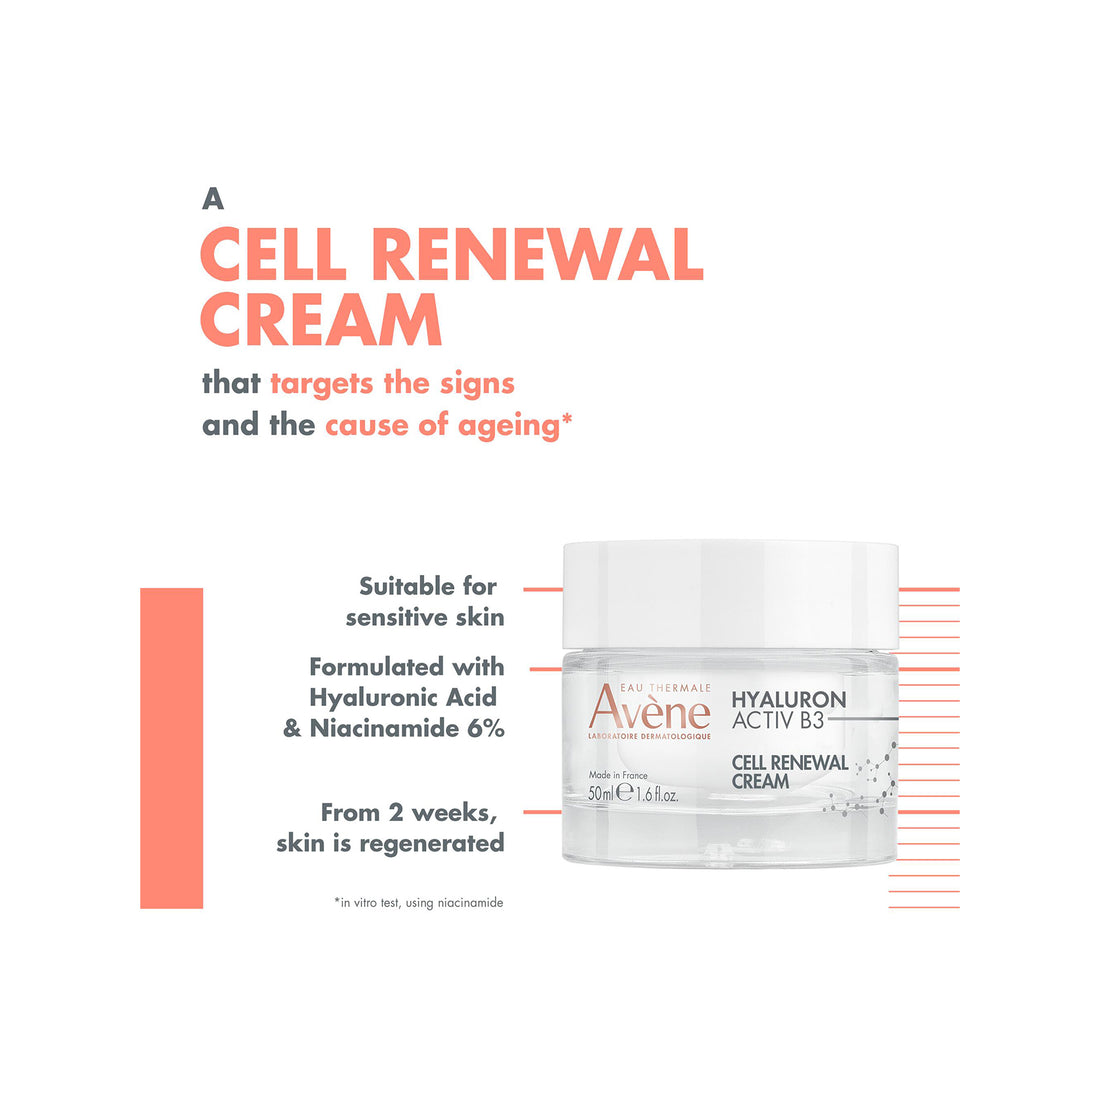 Avène Hyaluron Activ B3 Cell Renewal Cream 50ml (1.6 fl oz)